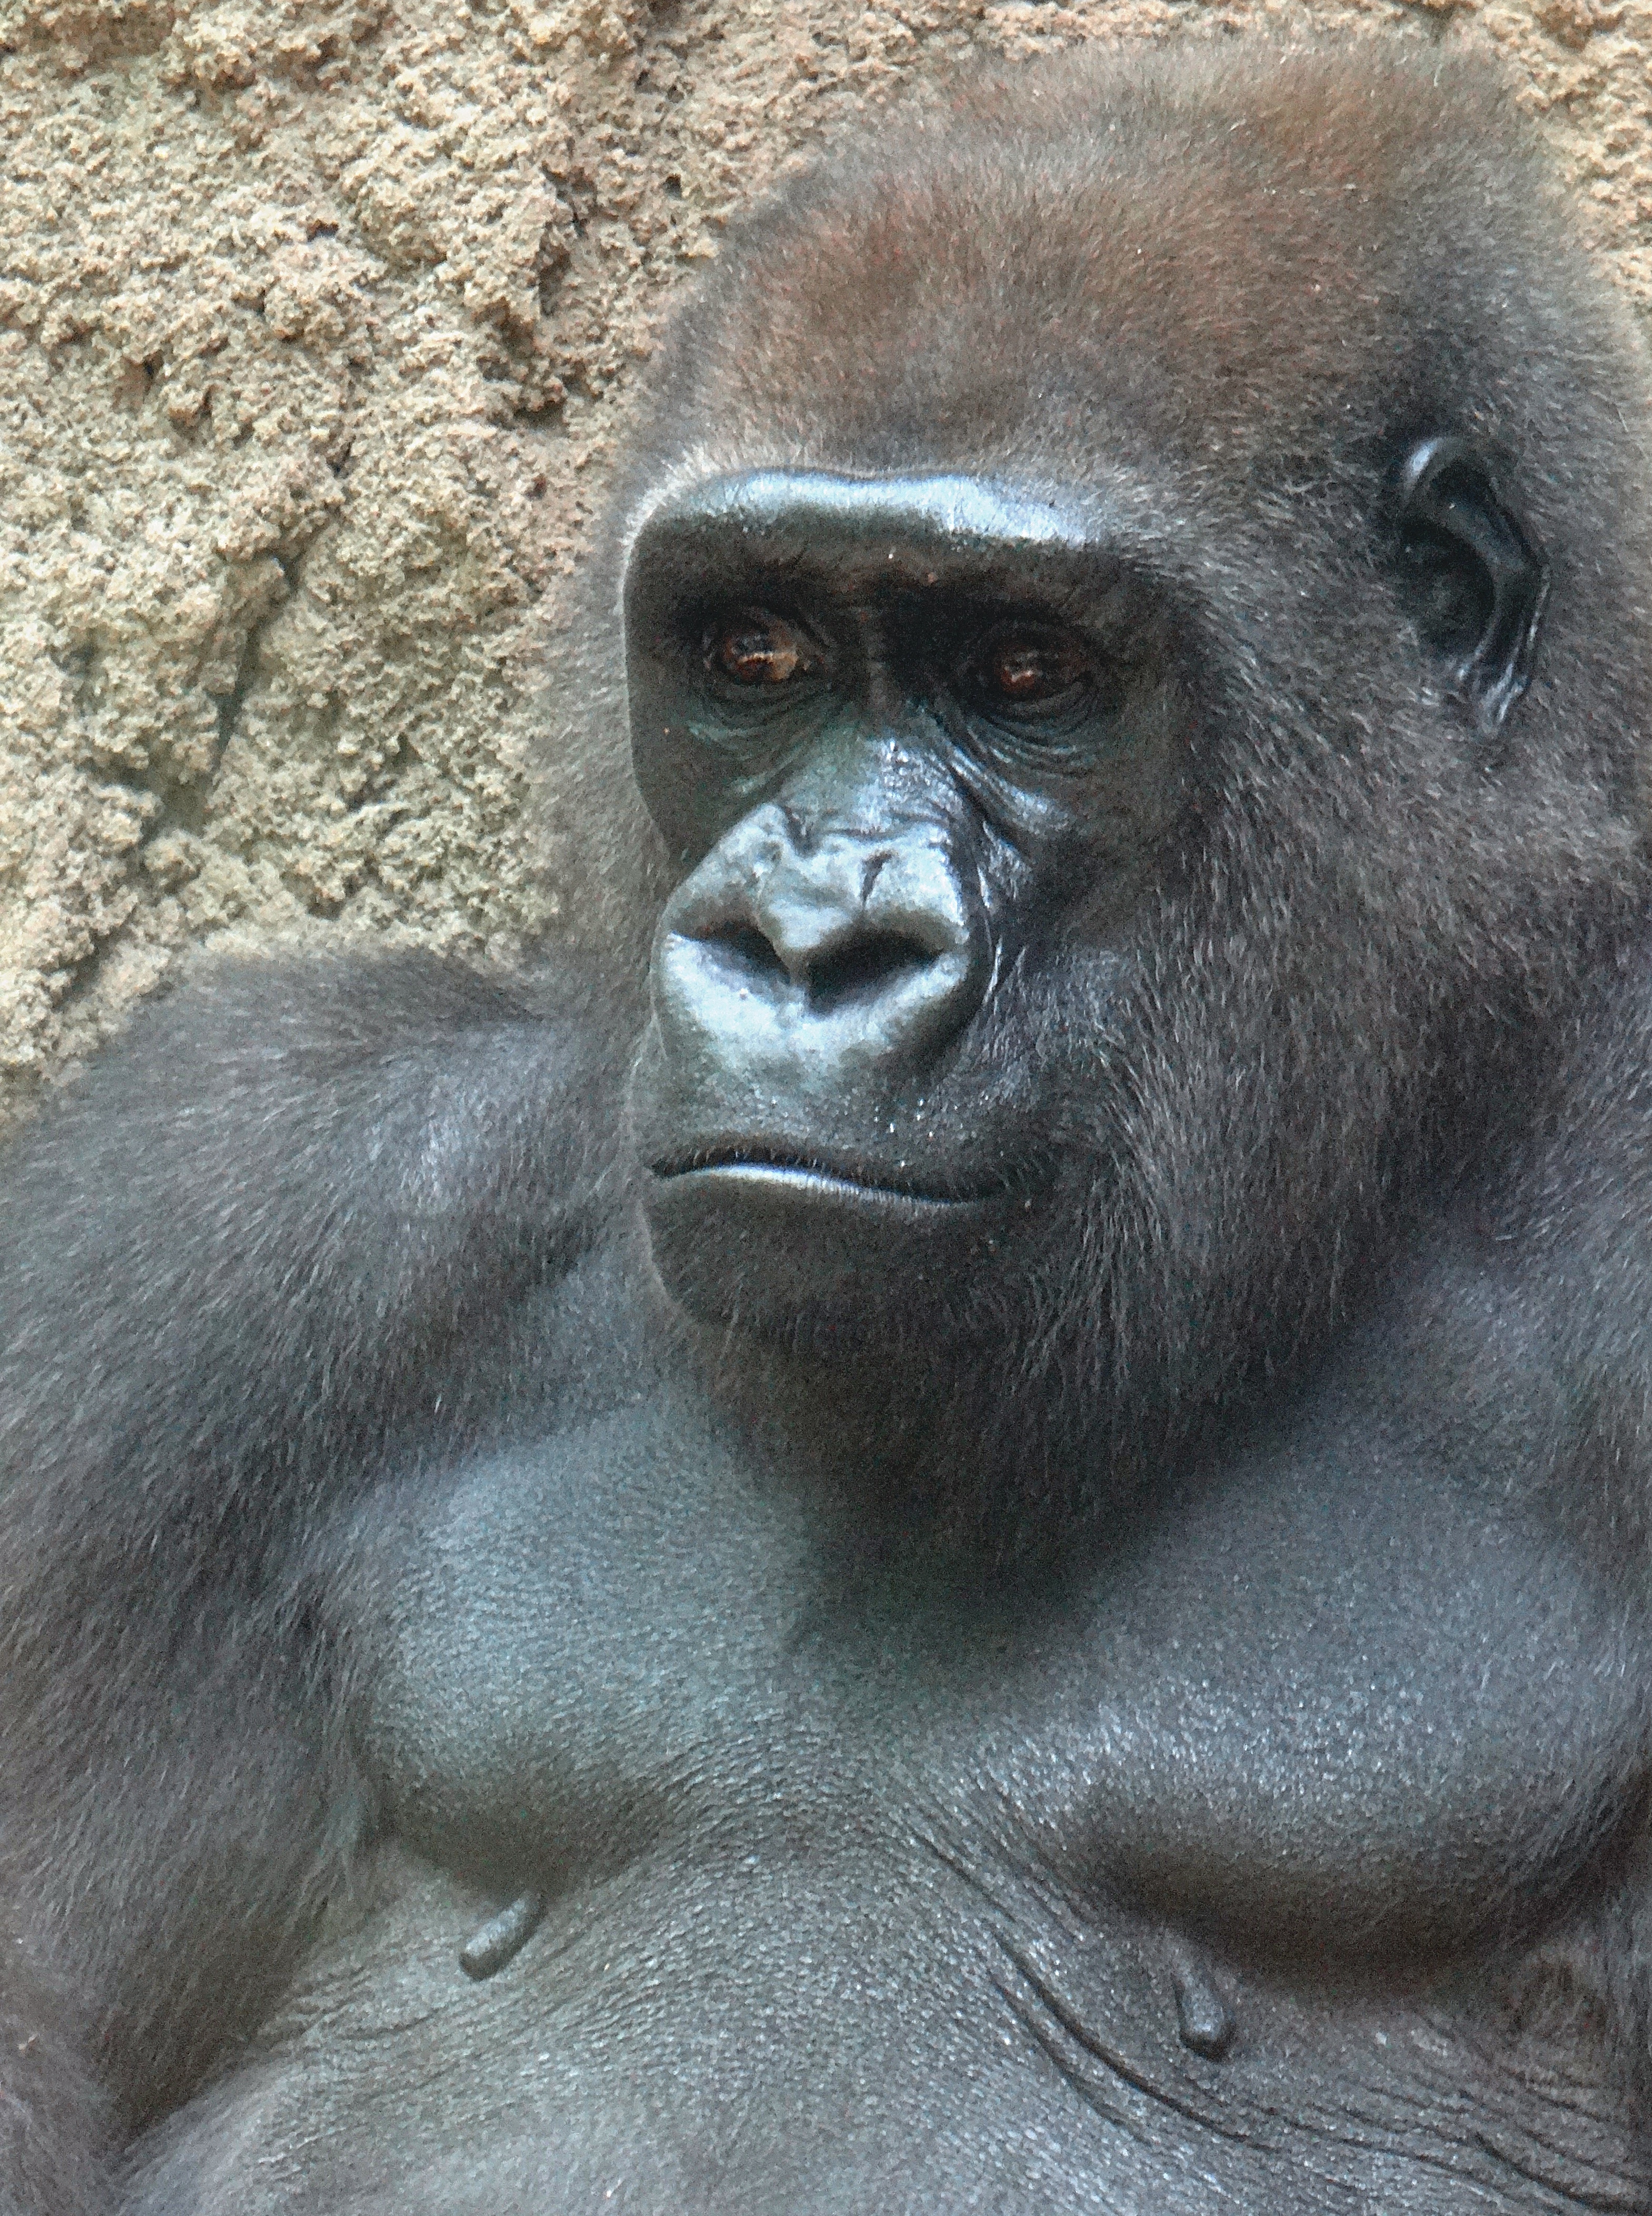 Gorilla at the Bronx Zoo